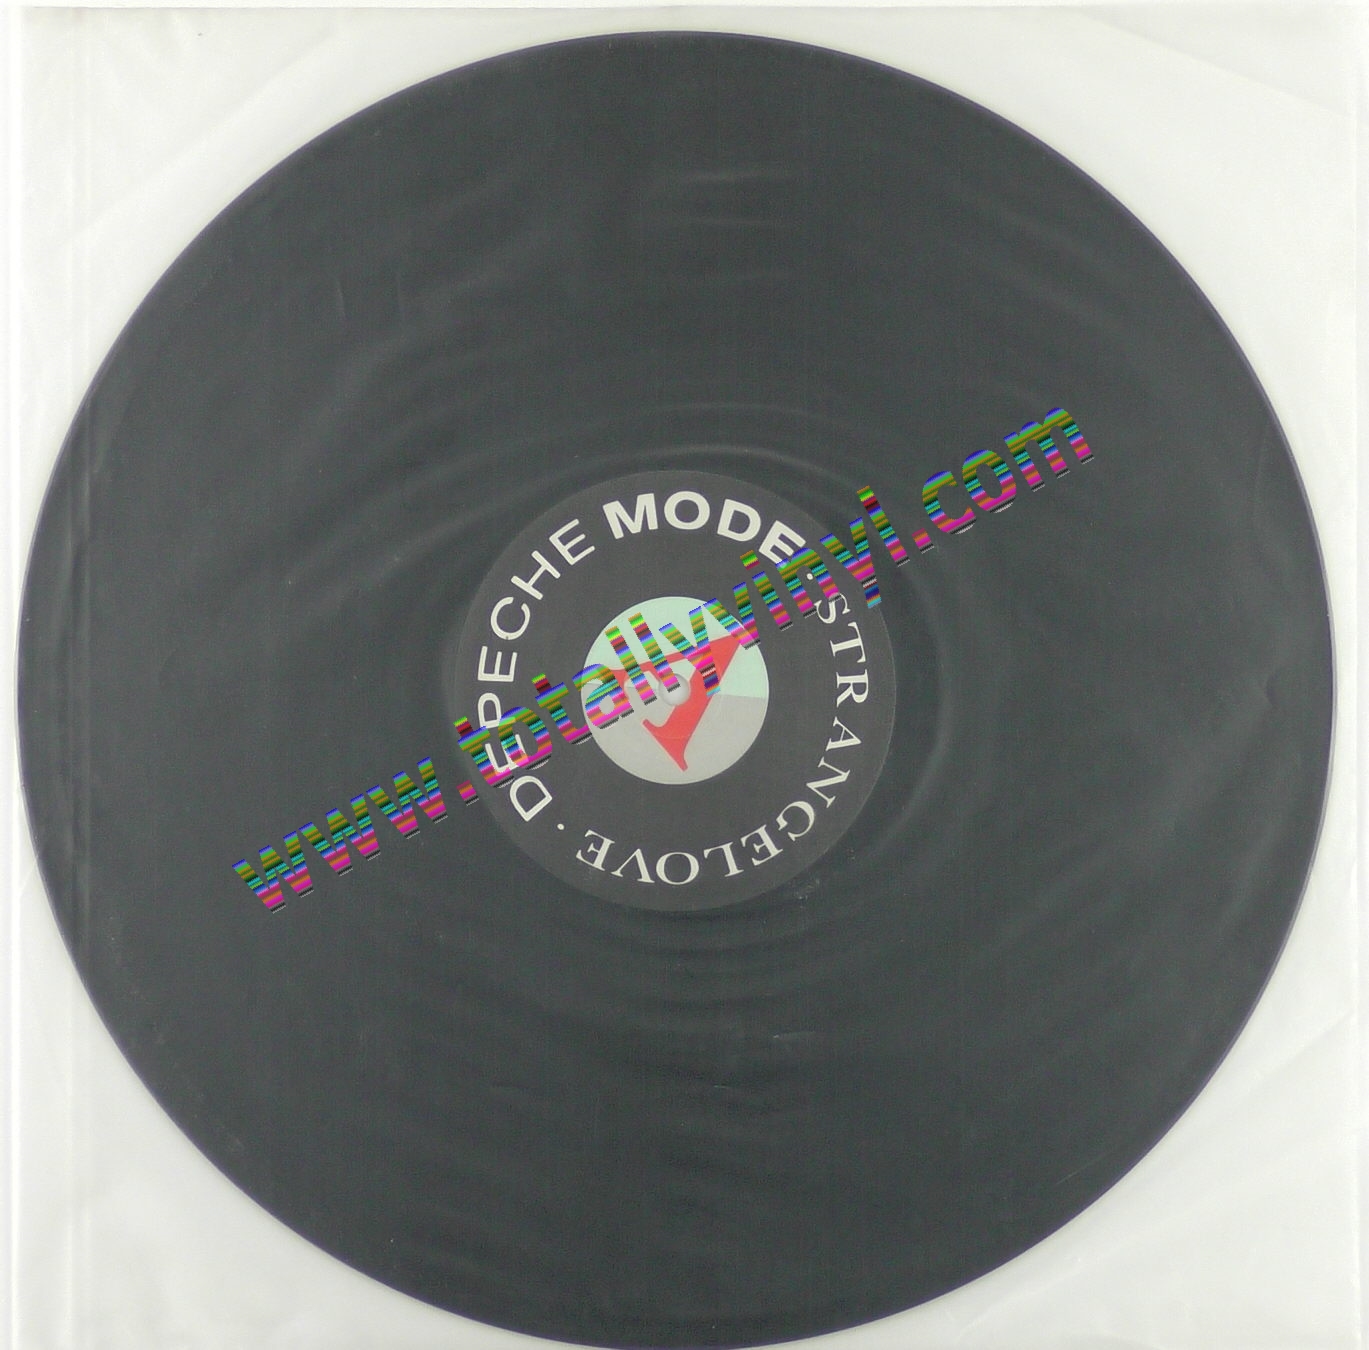 Totally Vinyl || Depeche Mode - Strangelove ( maxi-mix) / Strangelove (midi-mix) 12 inch Picture Cover